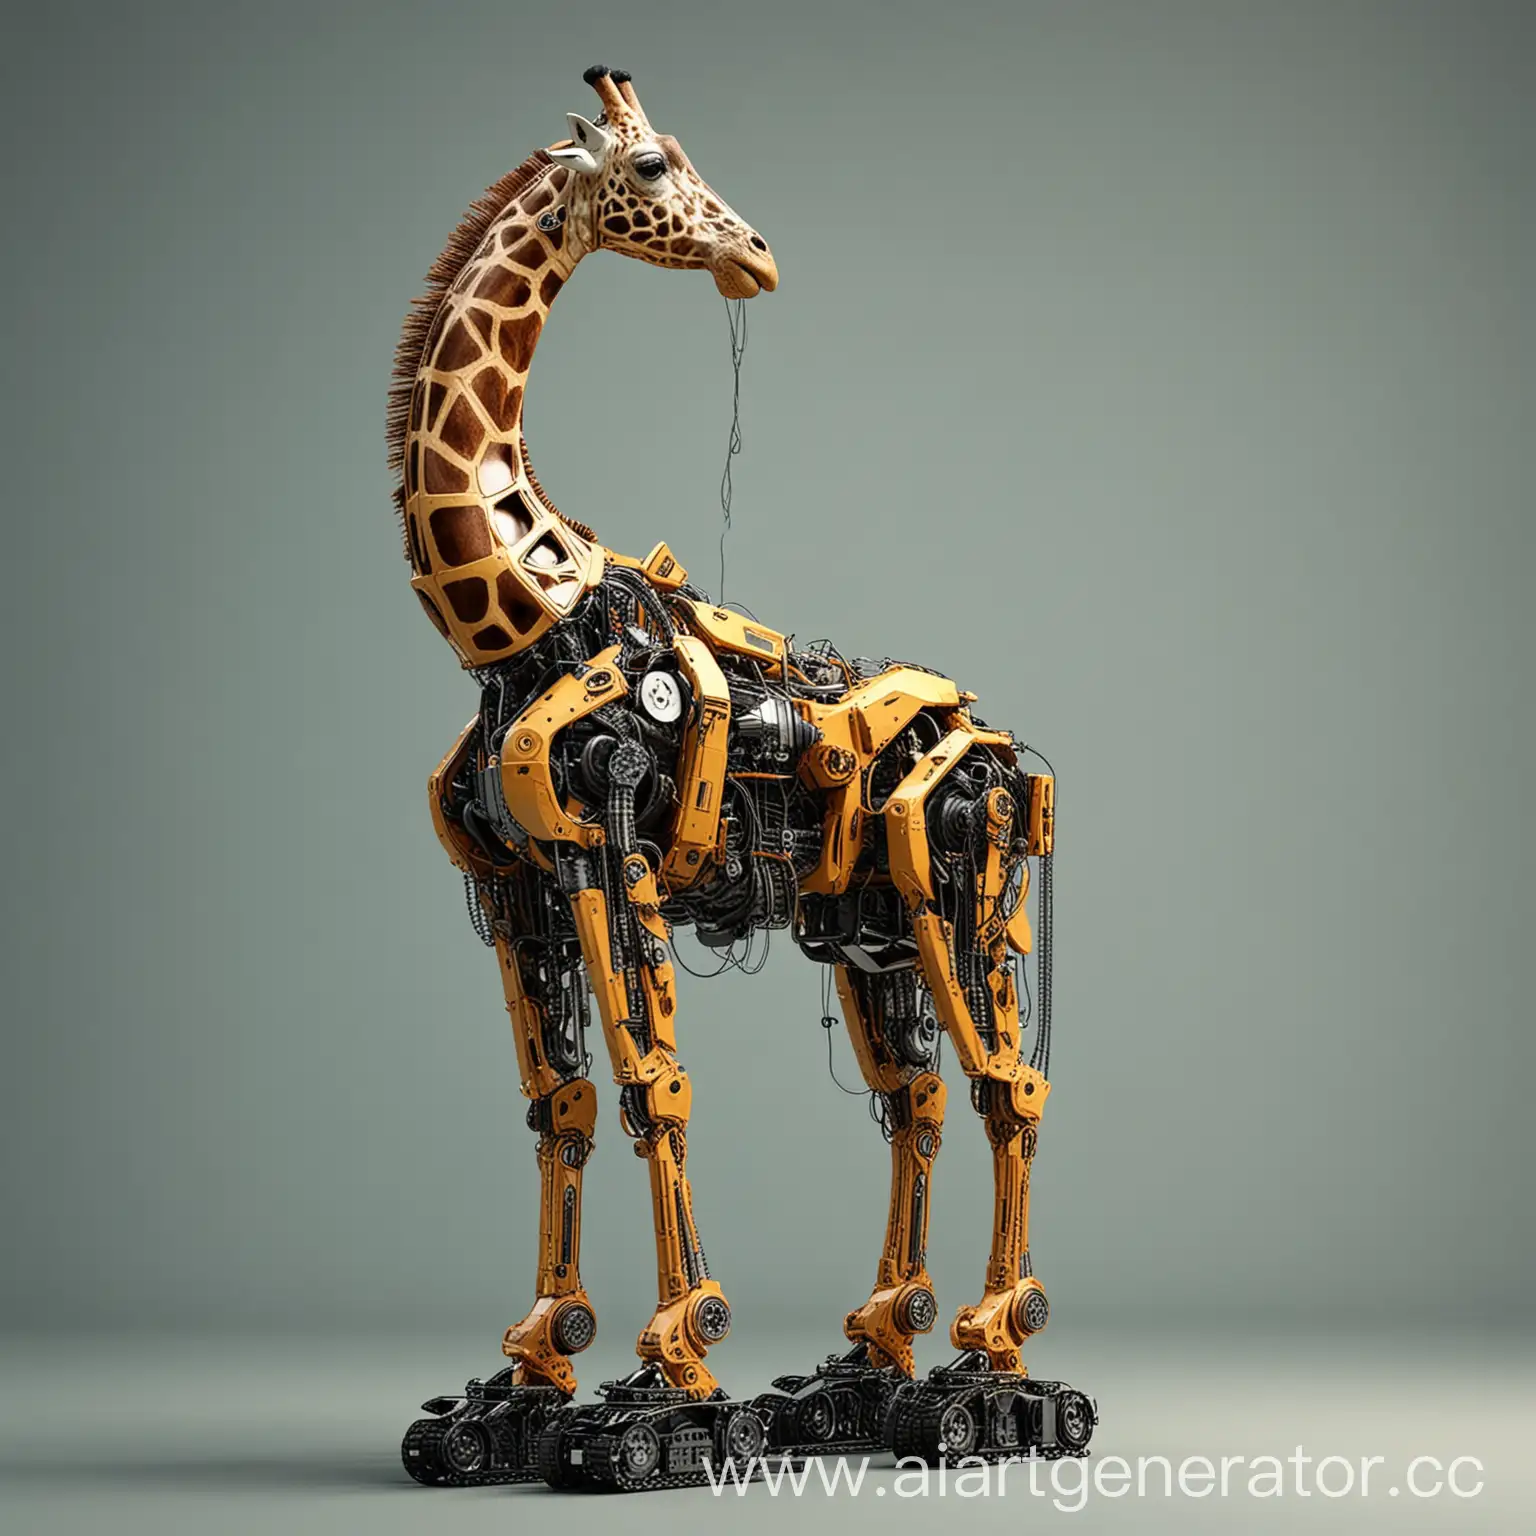 Giraffe-Machine-Transformation-Imagining-the-Marvels-of-Technology